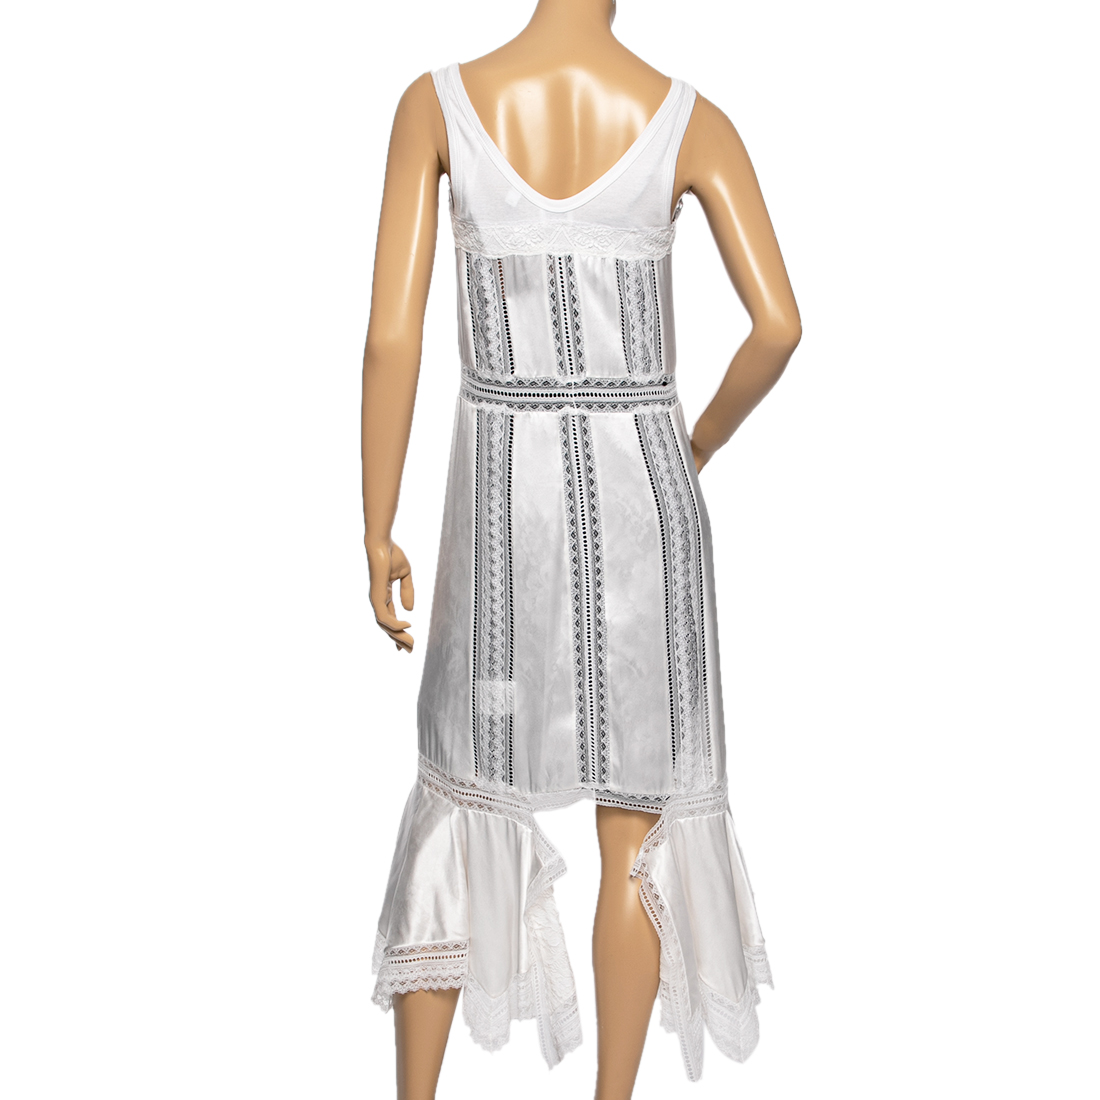 Burberry White Satin & Lace Paneled Slip Dress XS